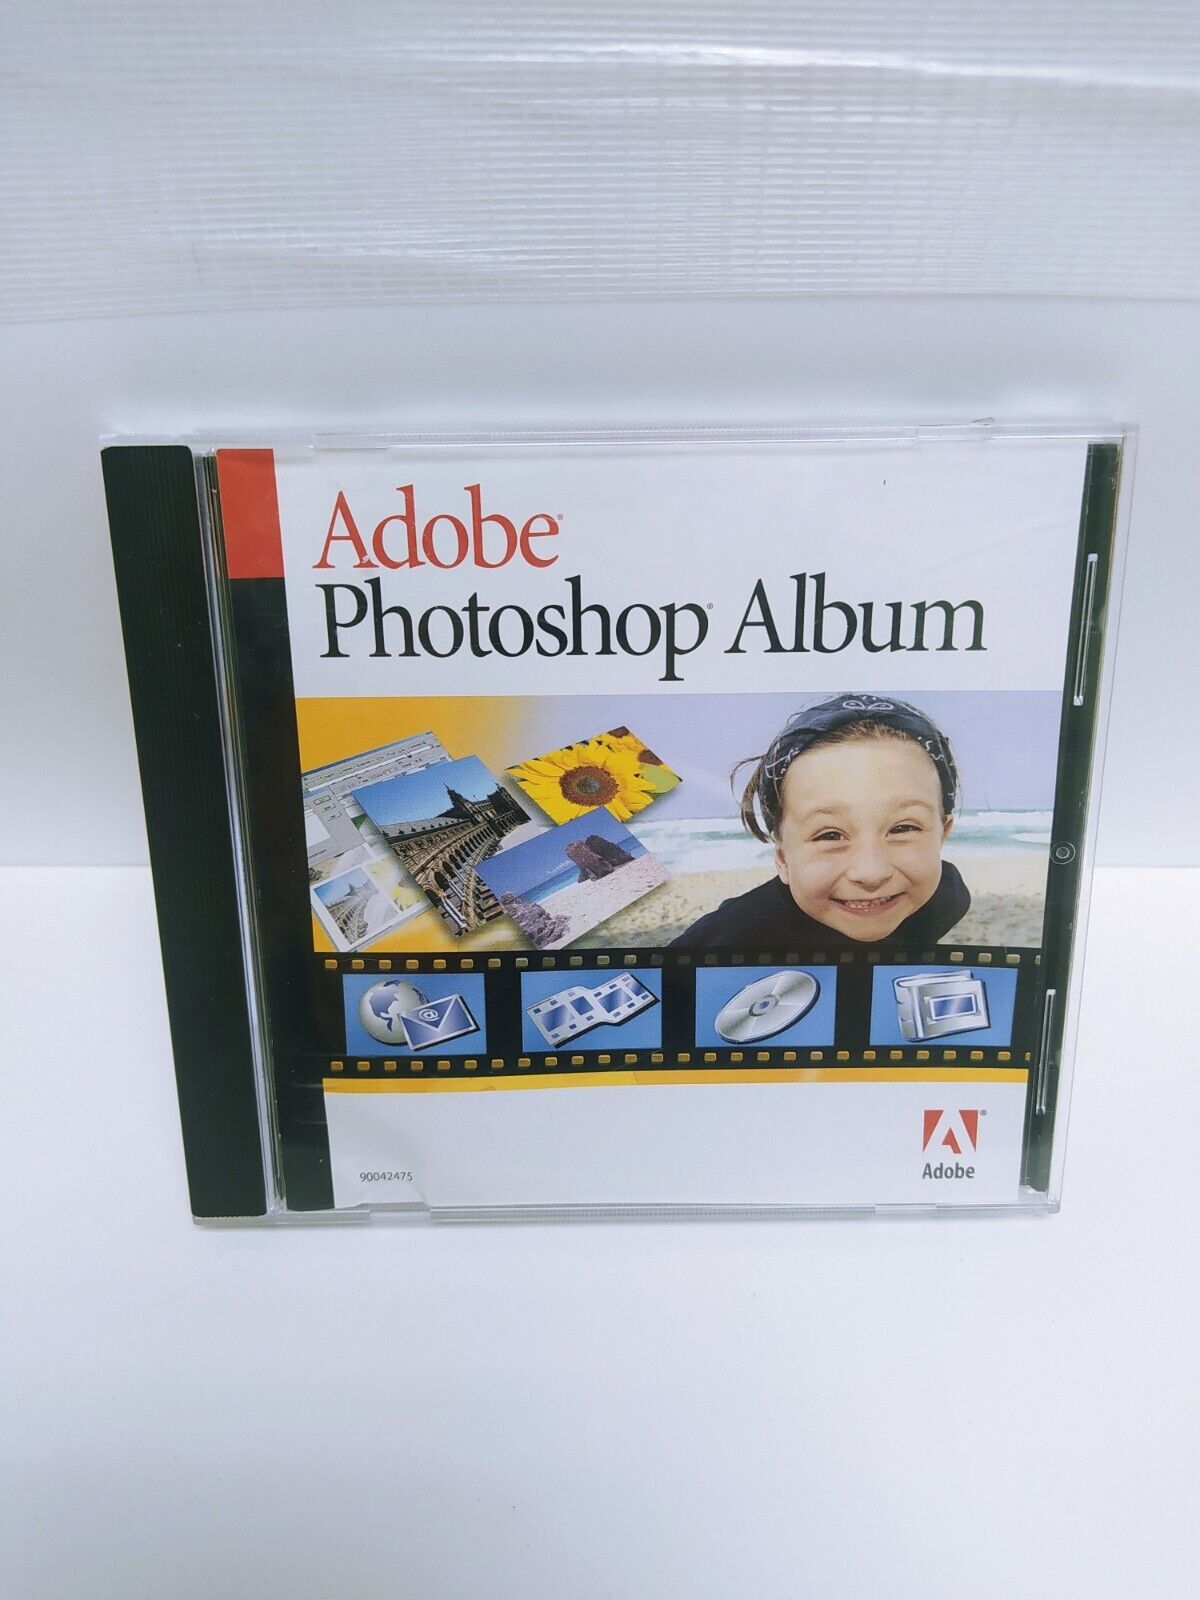 Adobe Photoshop Album (PC, 2002) LIKE N EW REGISTRY CODE FREE SAME DAY SHIPPING